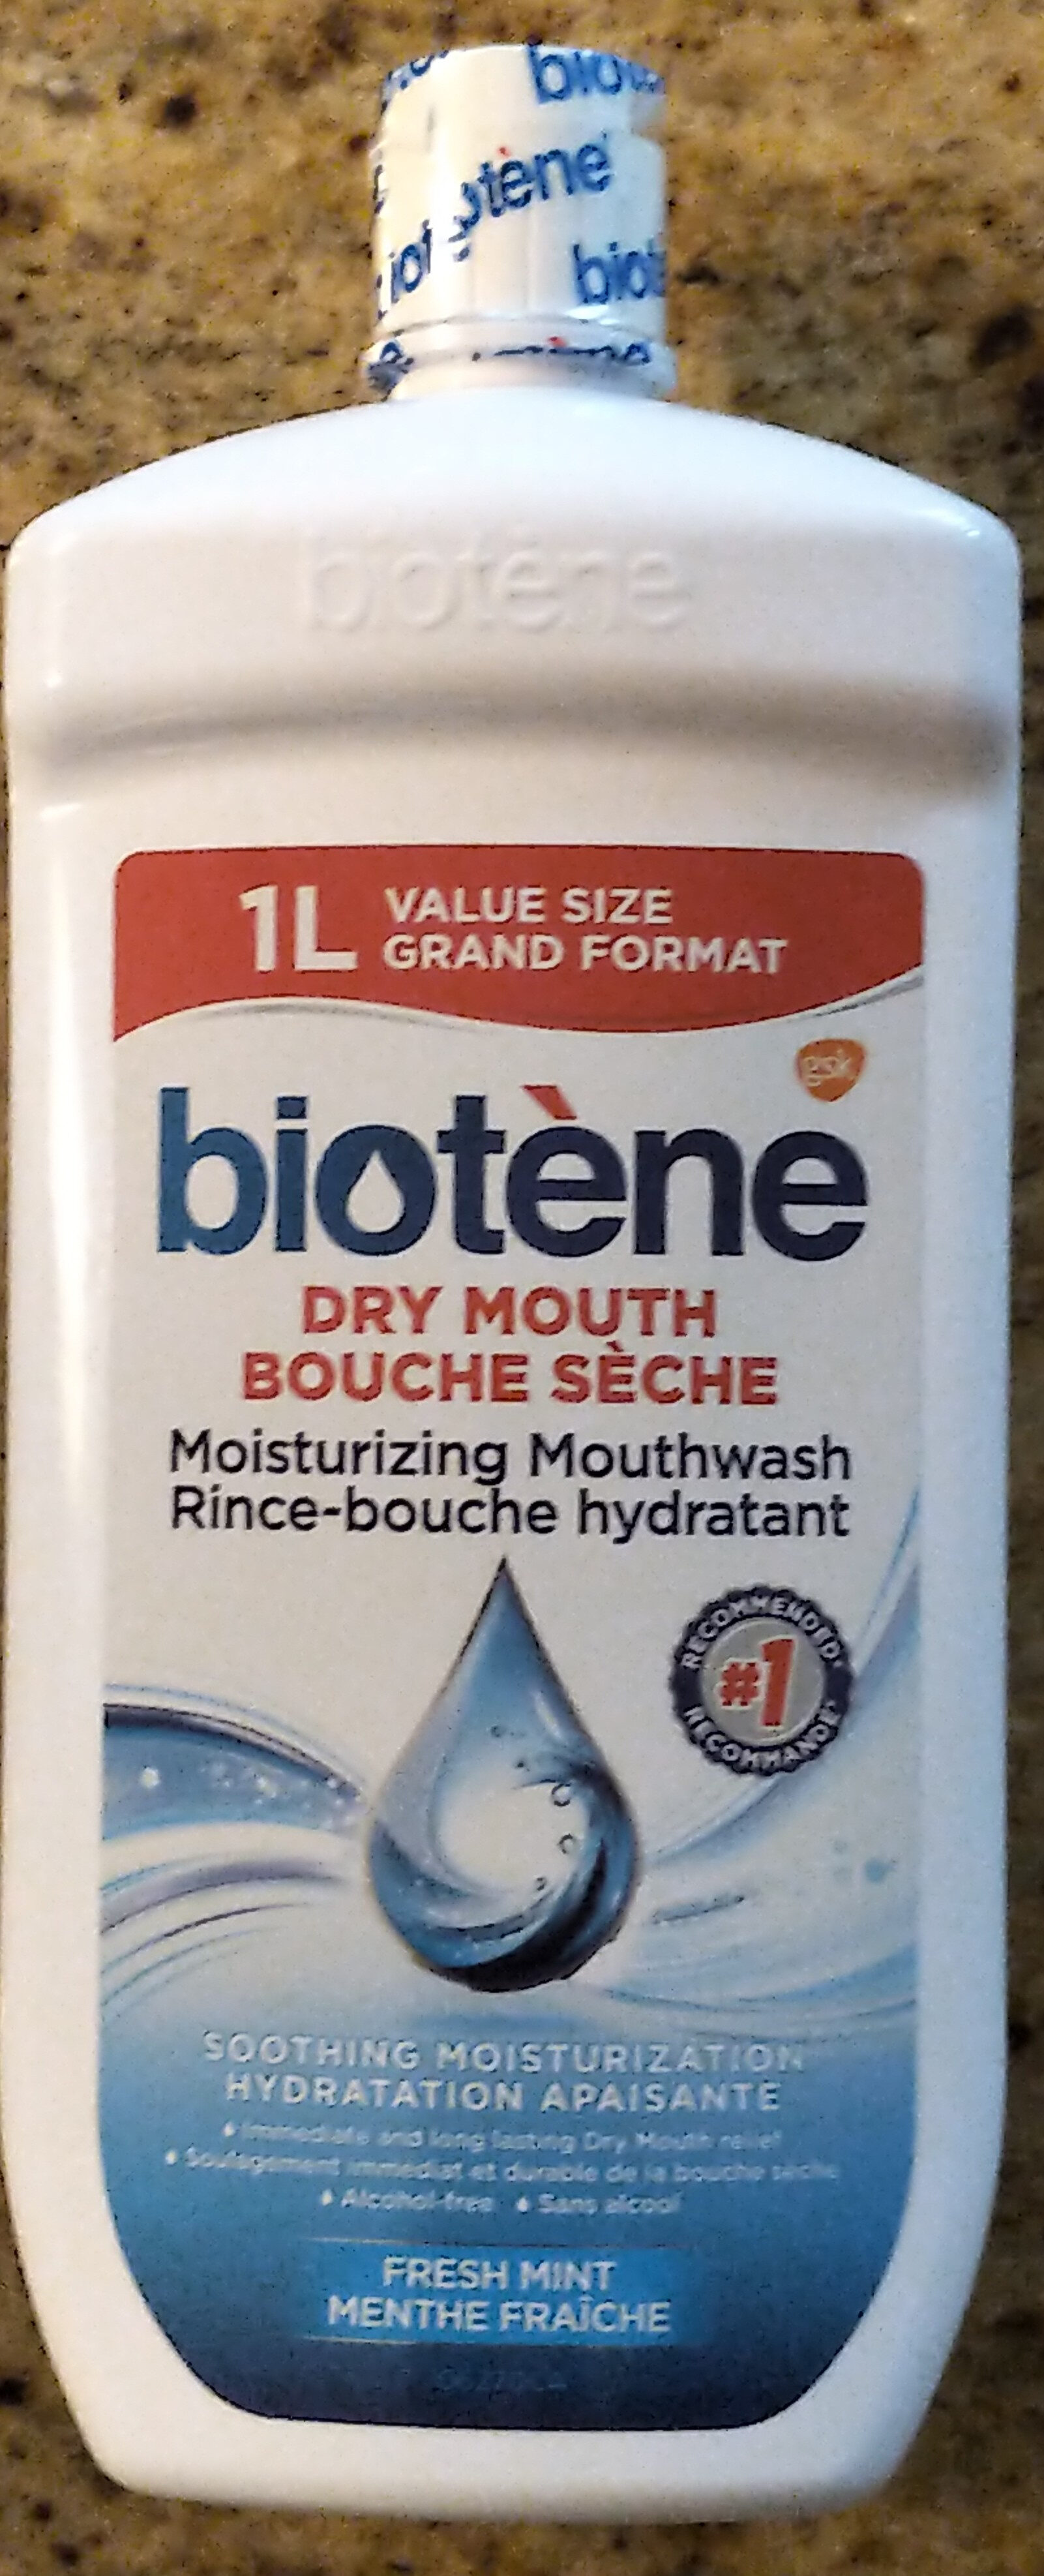 Fresh Mint Dry Mouth Moisturizing Mouthwash - Product - en